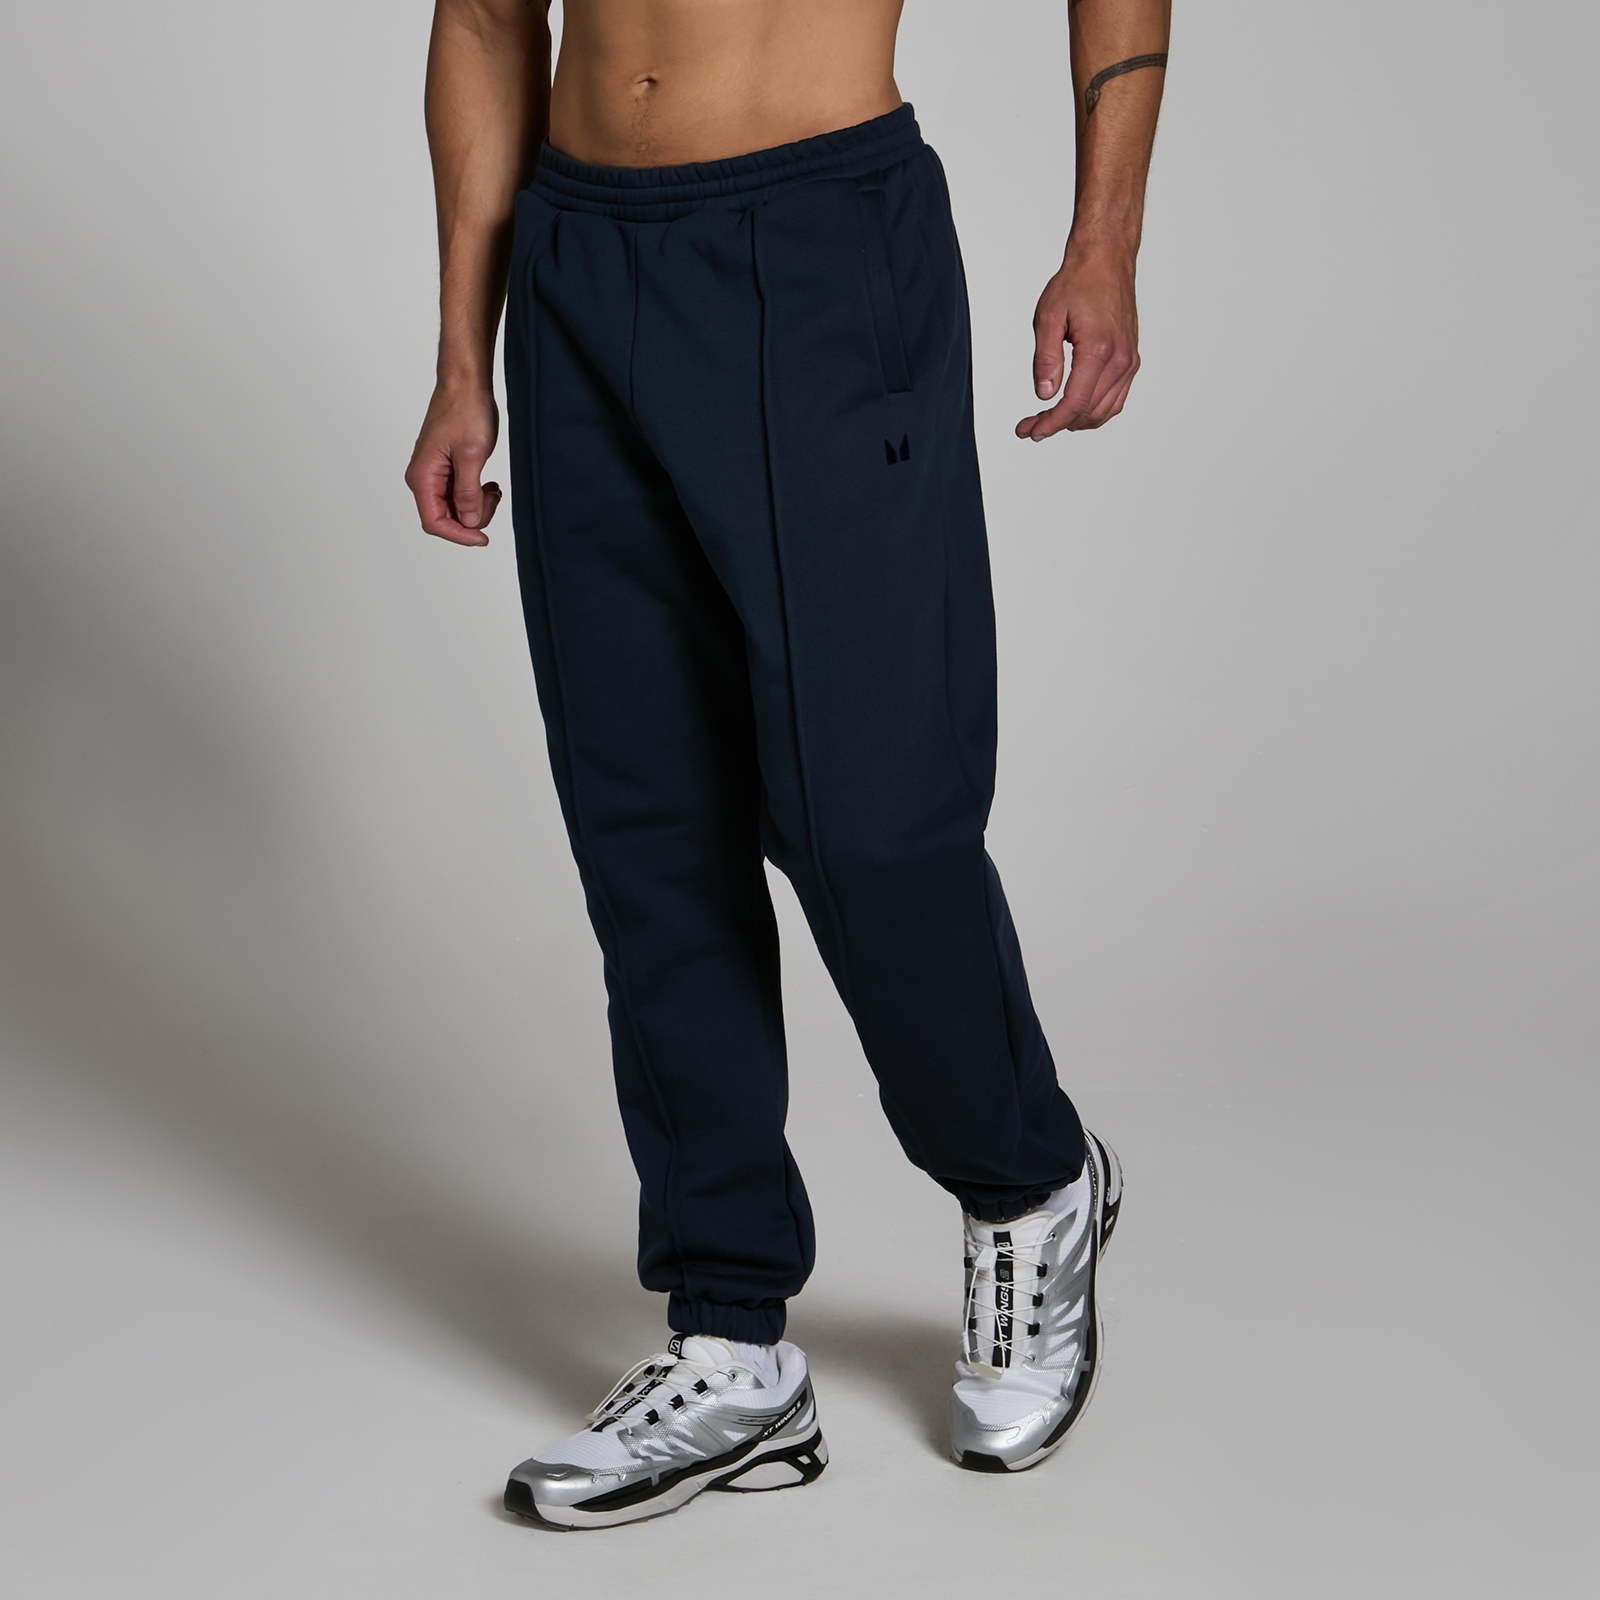 Image of Pantaloni da jogging pesanti oversize MP Lifestyle da uomo - Blu navy scuro - XXL